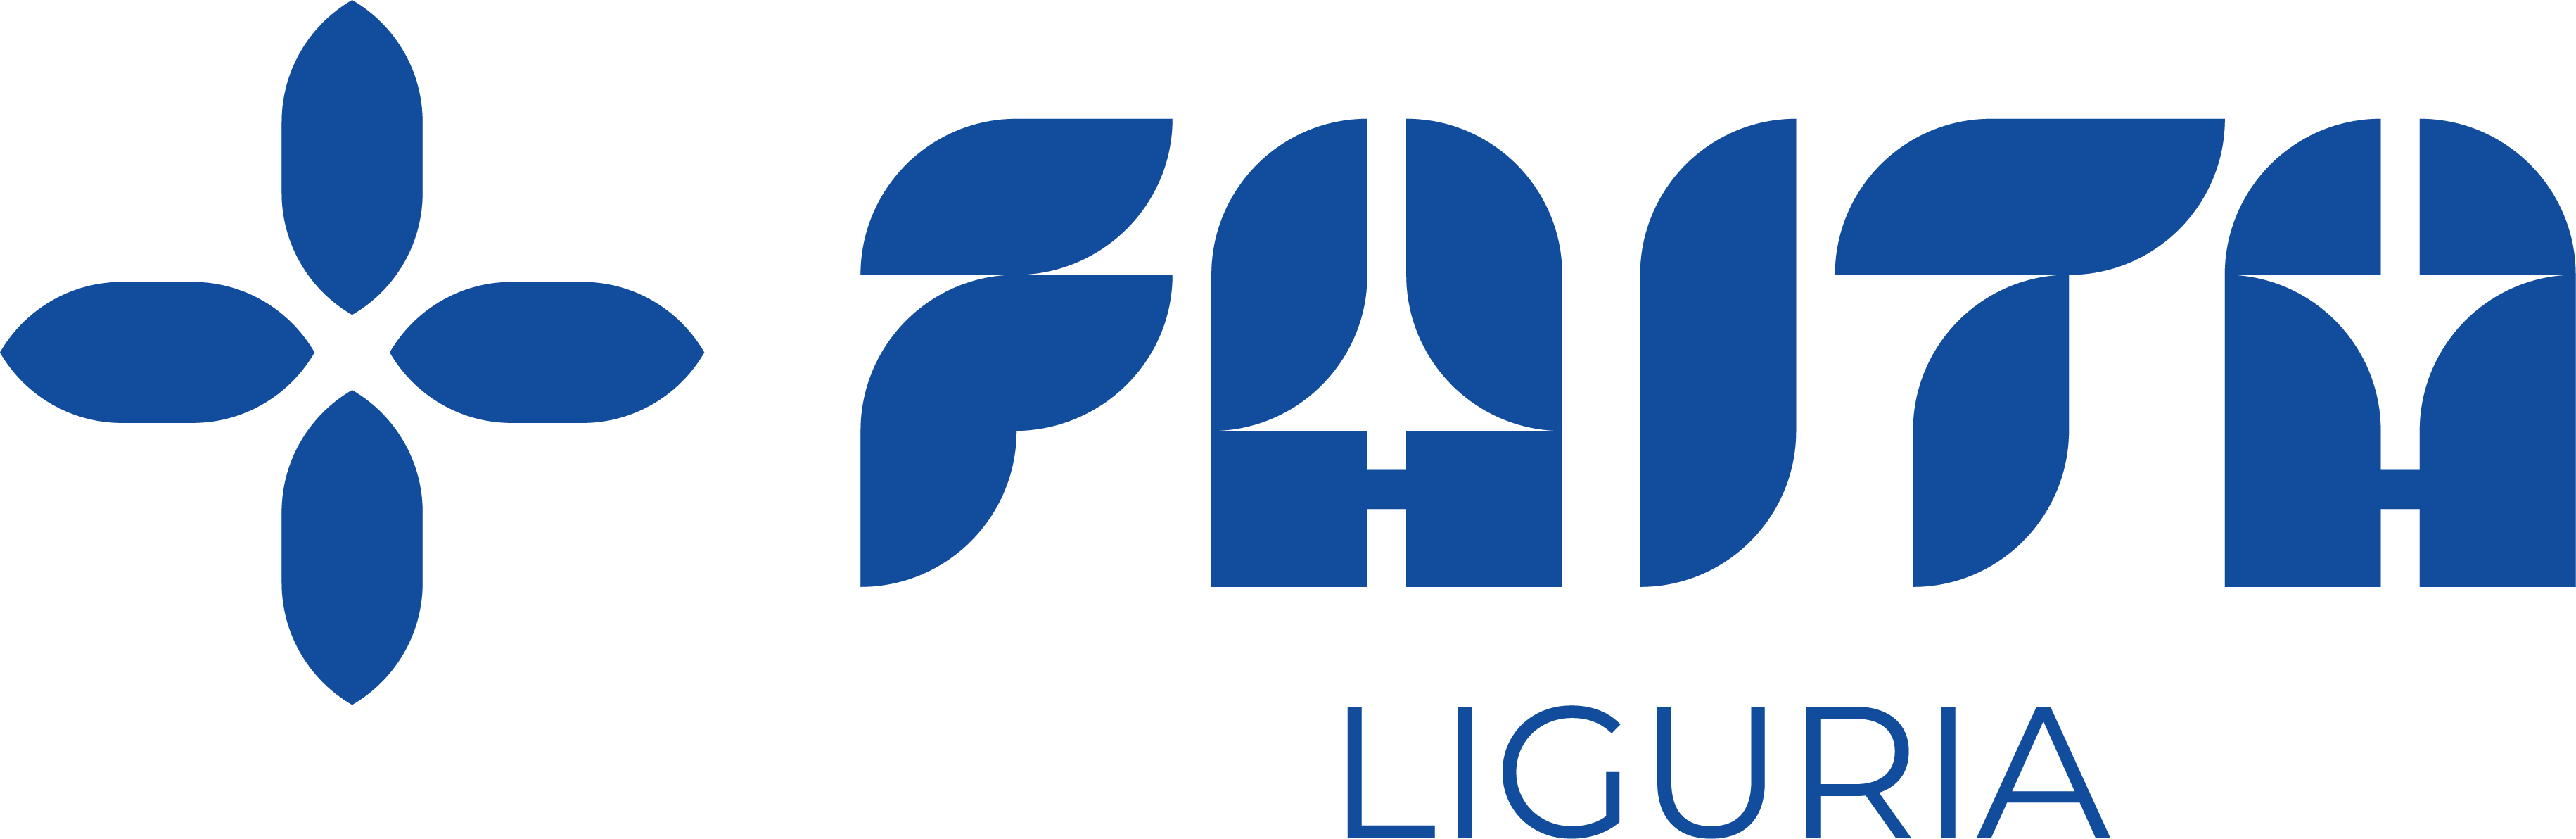 logo Faita Liguria